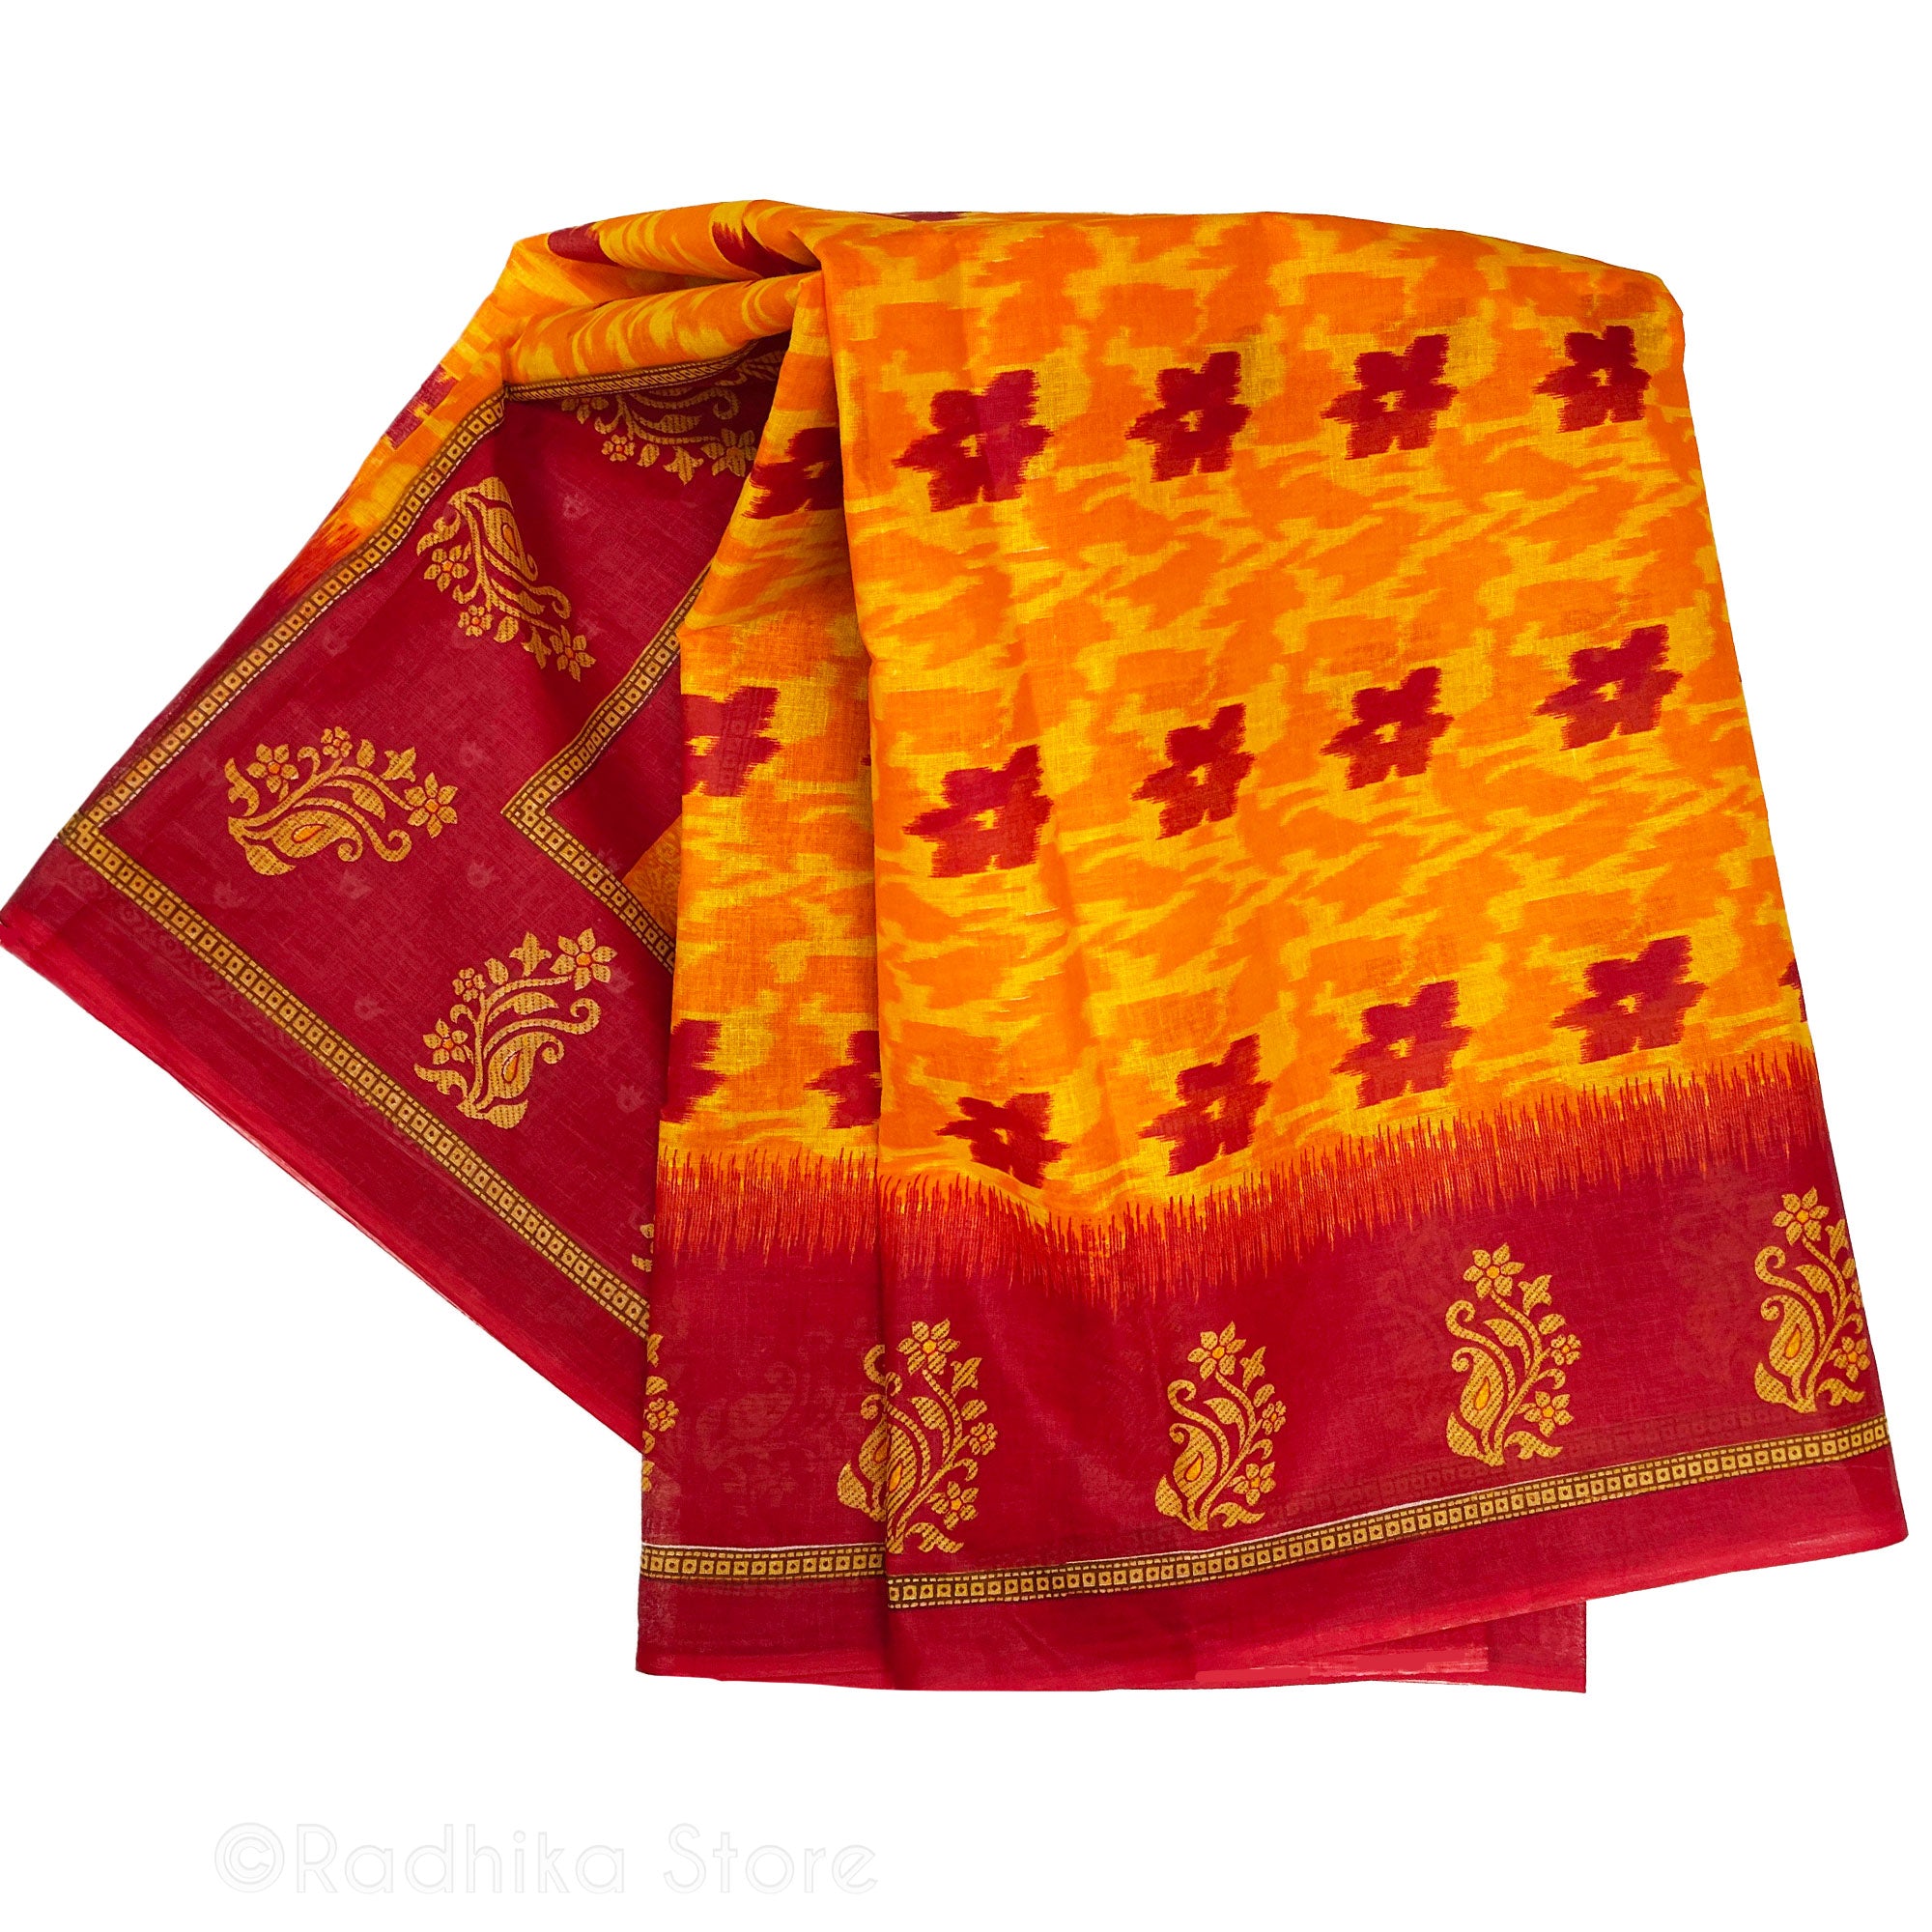 Mayapur Favorite- Printed Cotton Saree - Marigolds and Red Colors